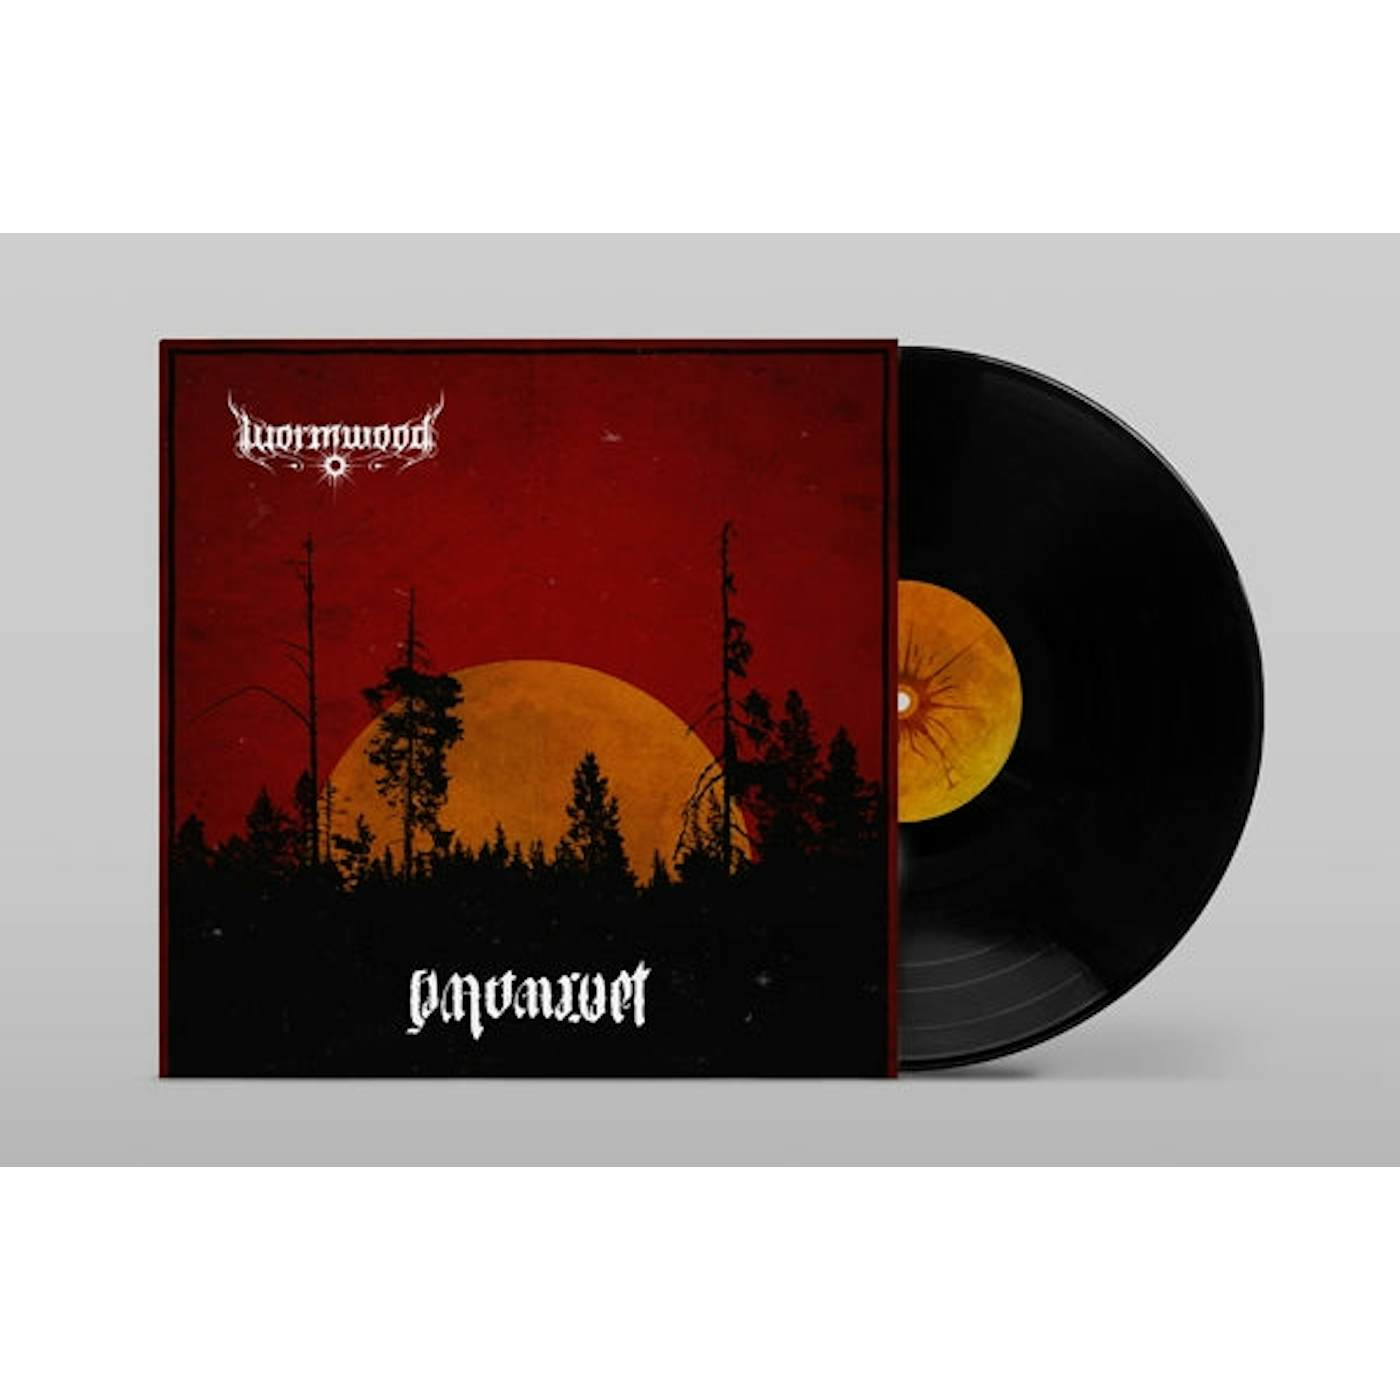 Wormwood LP - Nattarvet (Vinyl)